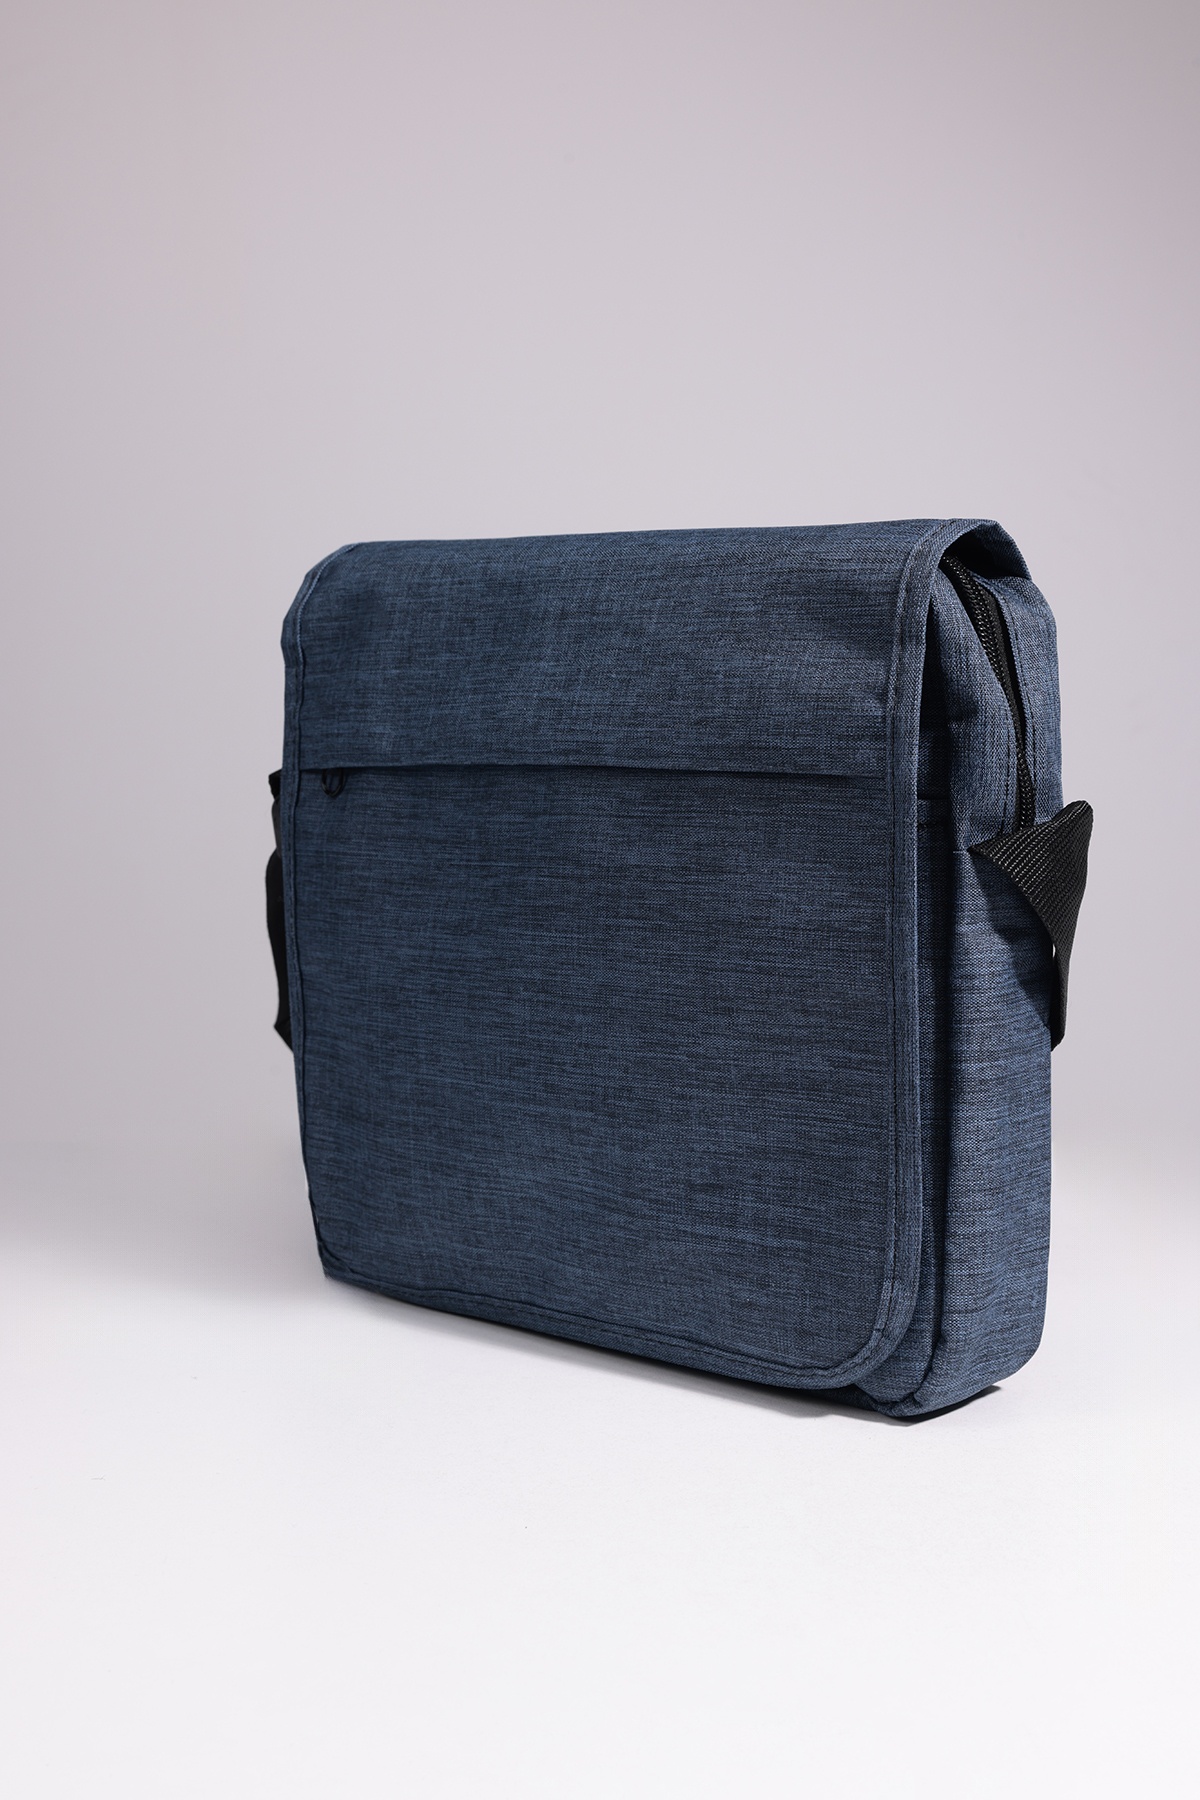 Textured Navy Blue Bag